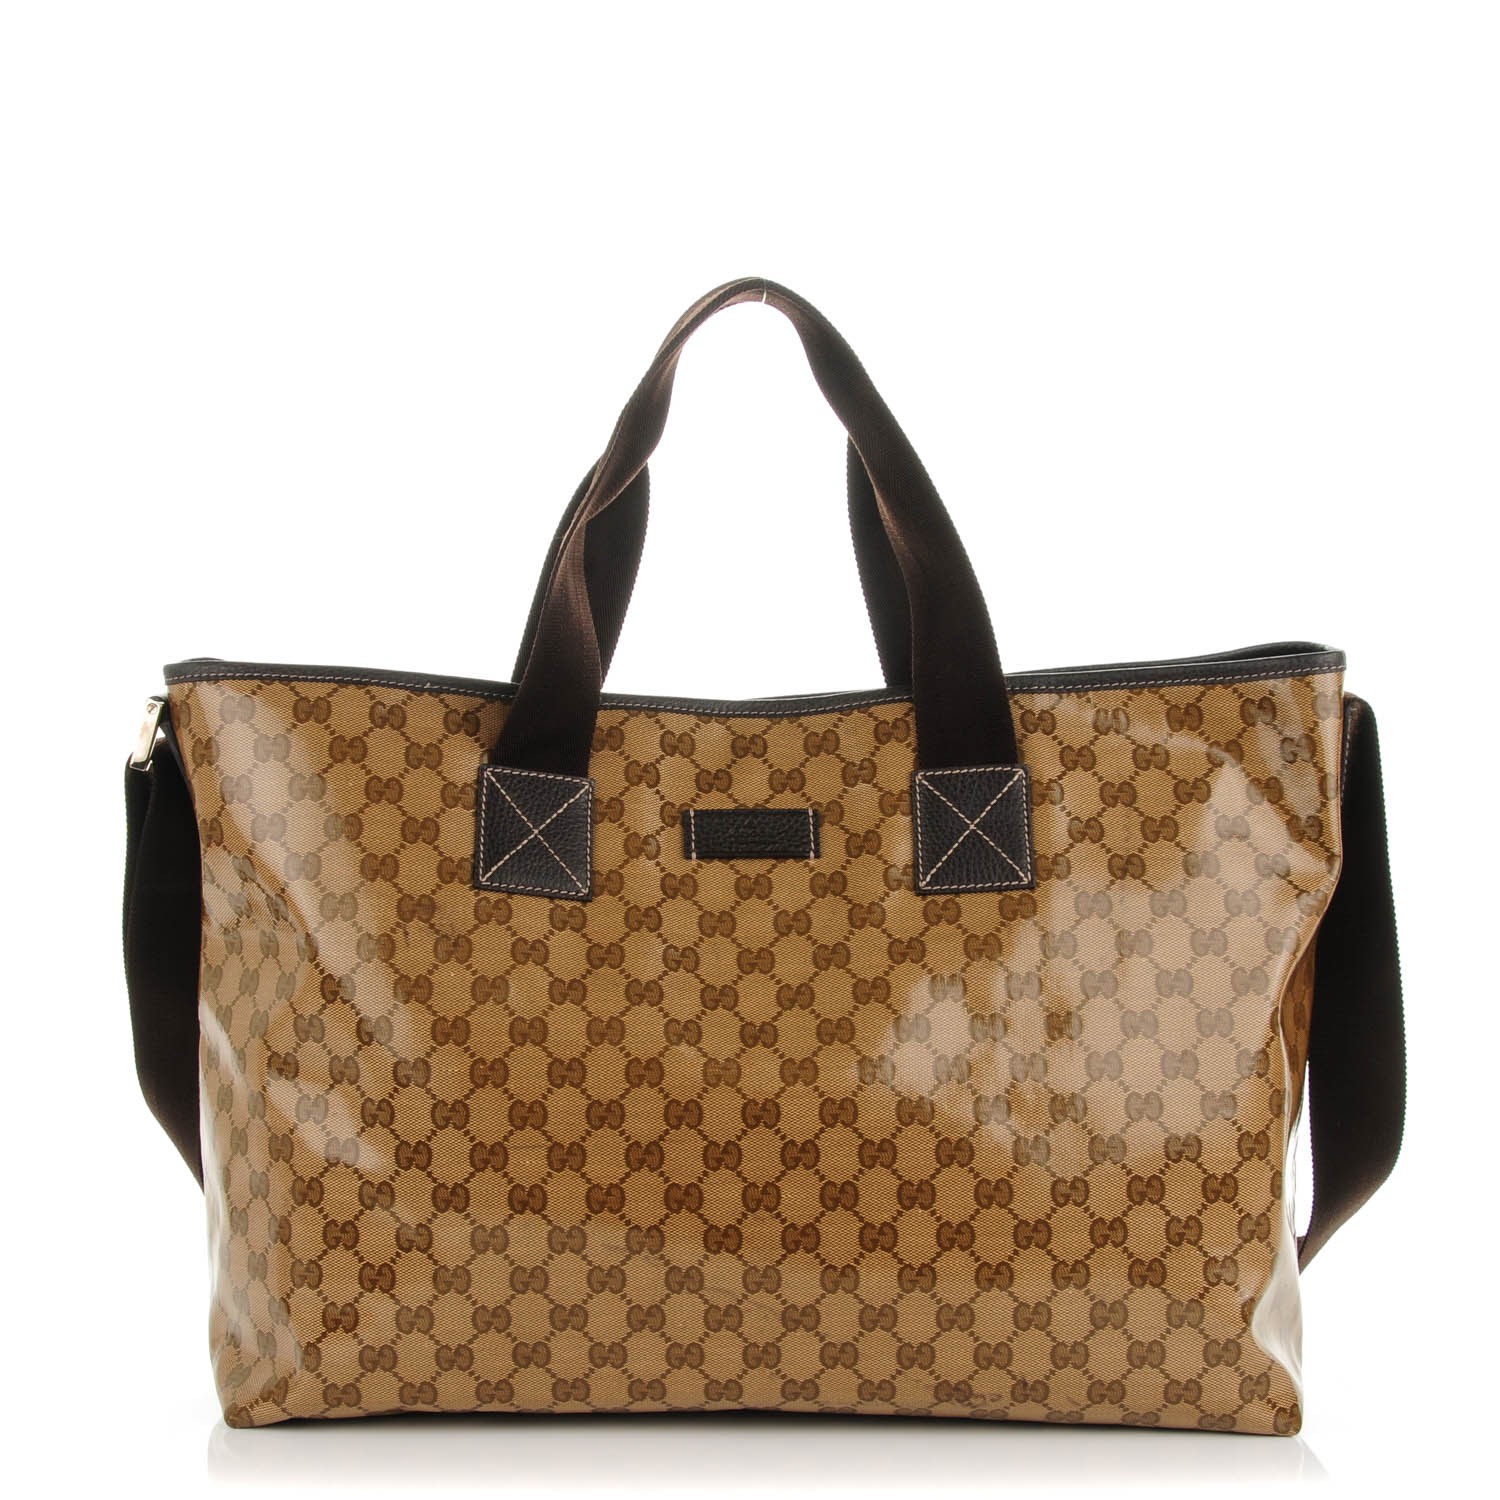 Does Neiman Marcus Sell Gucci Handbags | semashow.com